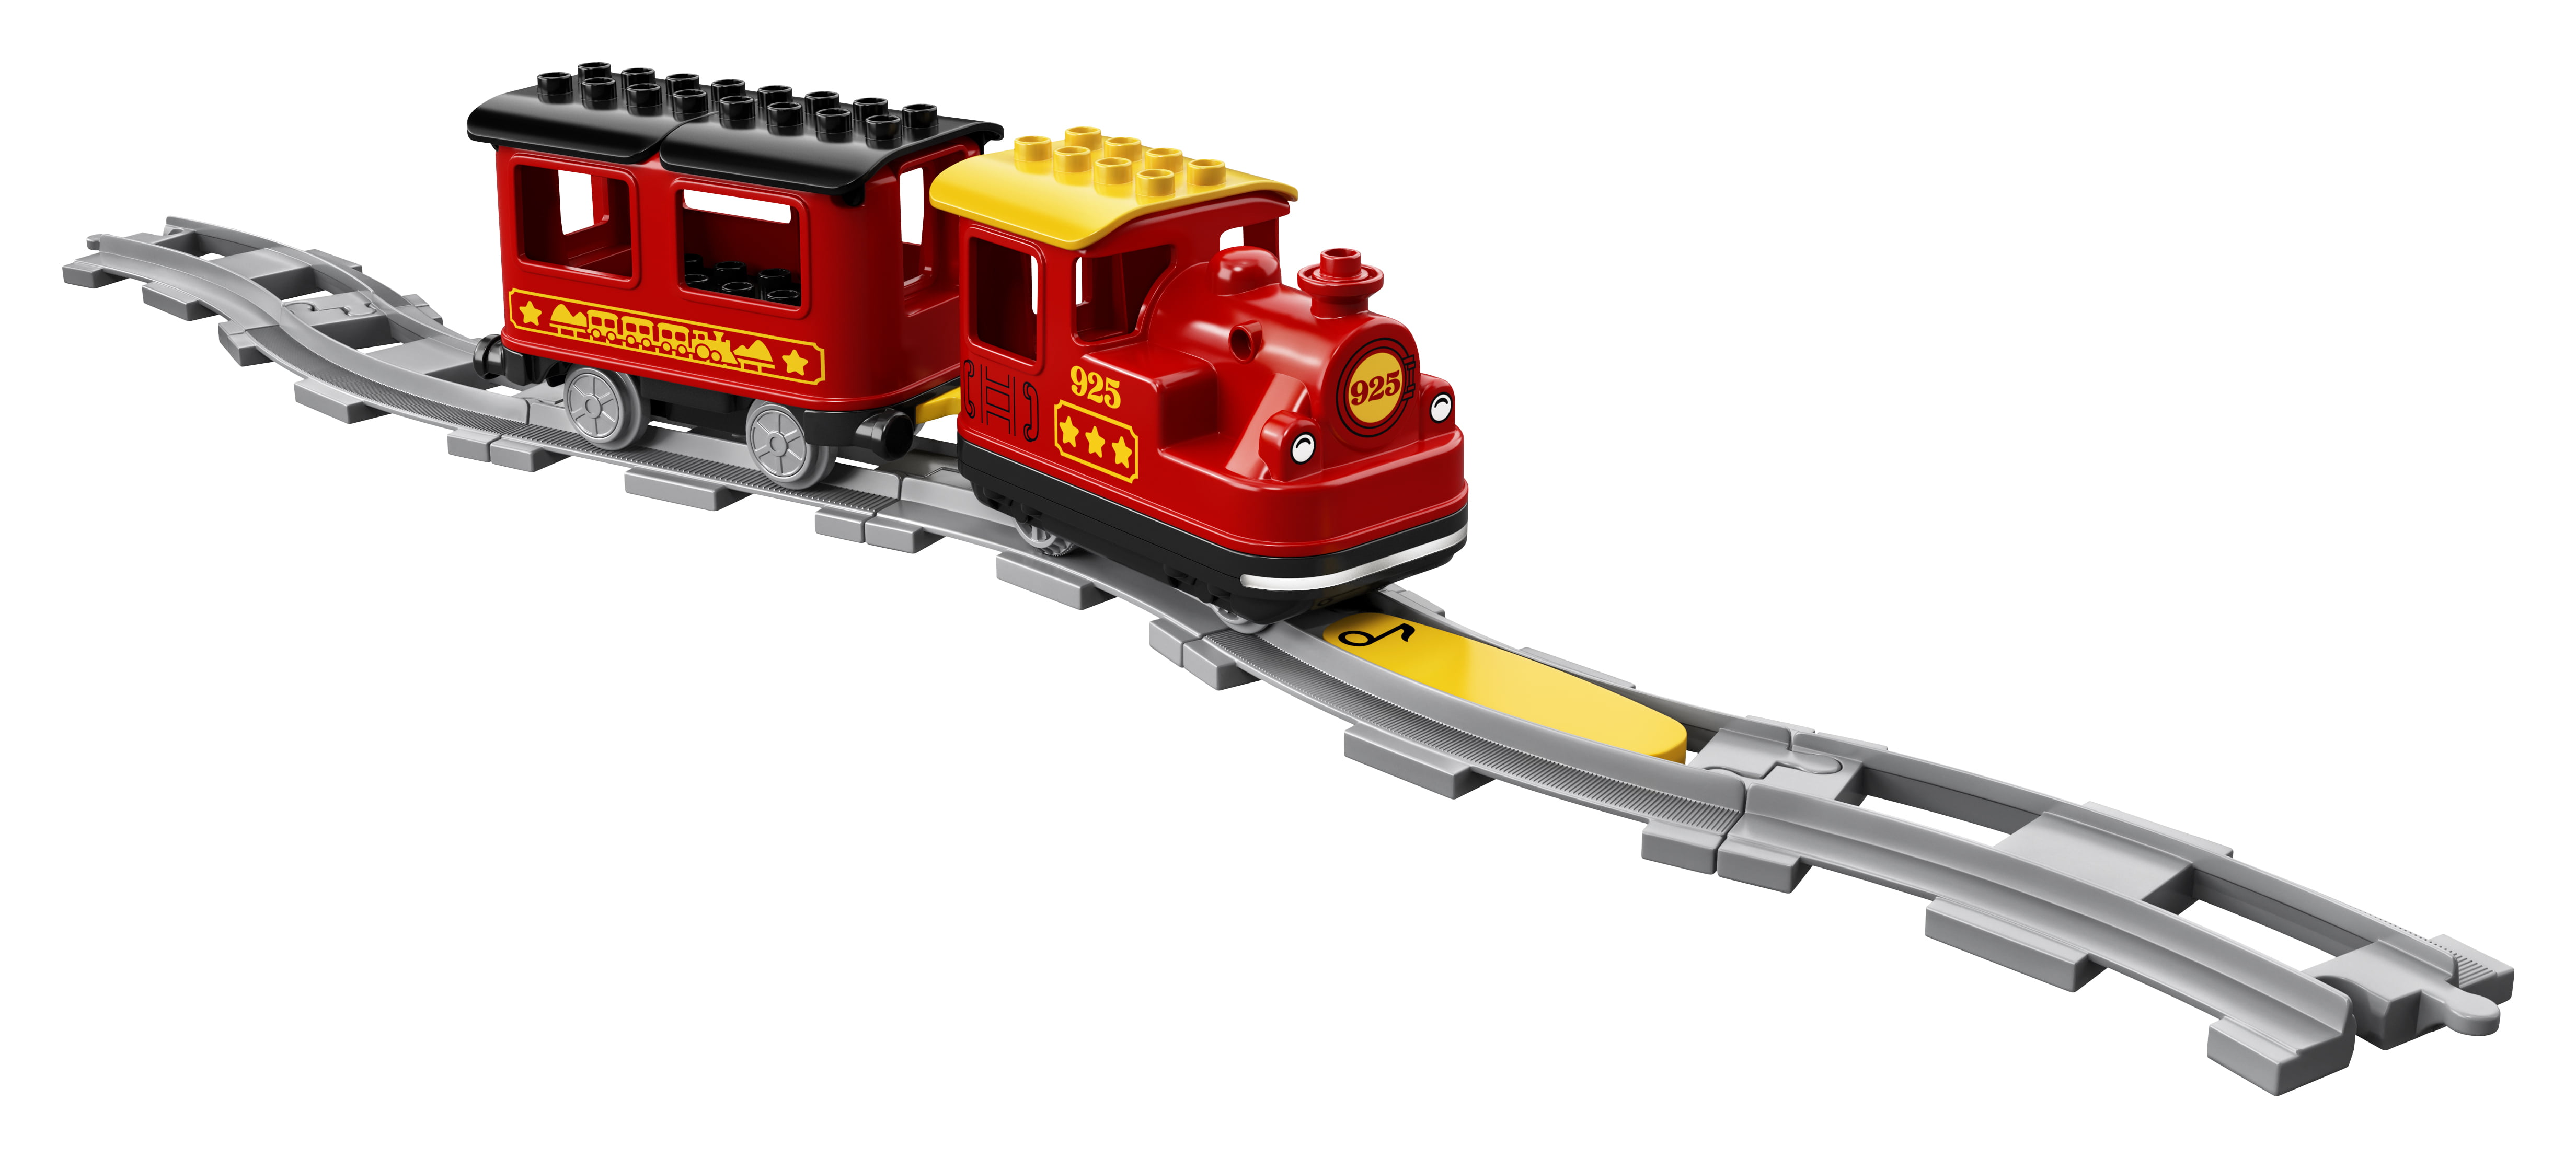 Lego Duplo 10874 STEAM TRAIN ONLY Railway Station NEW !! Lego Trains Duplo